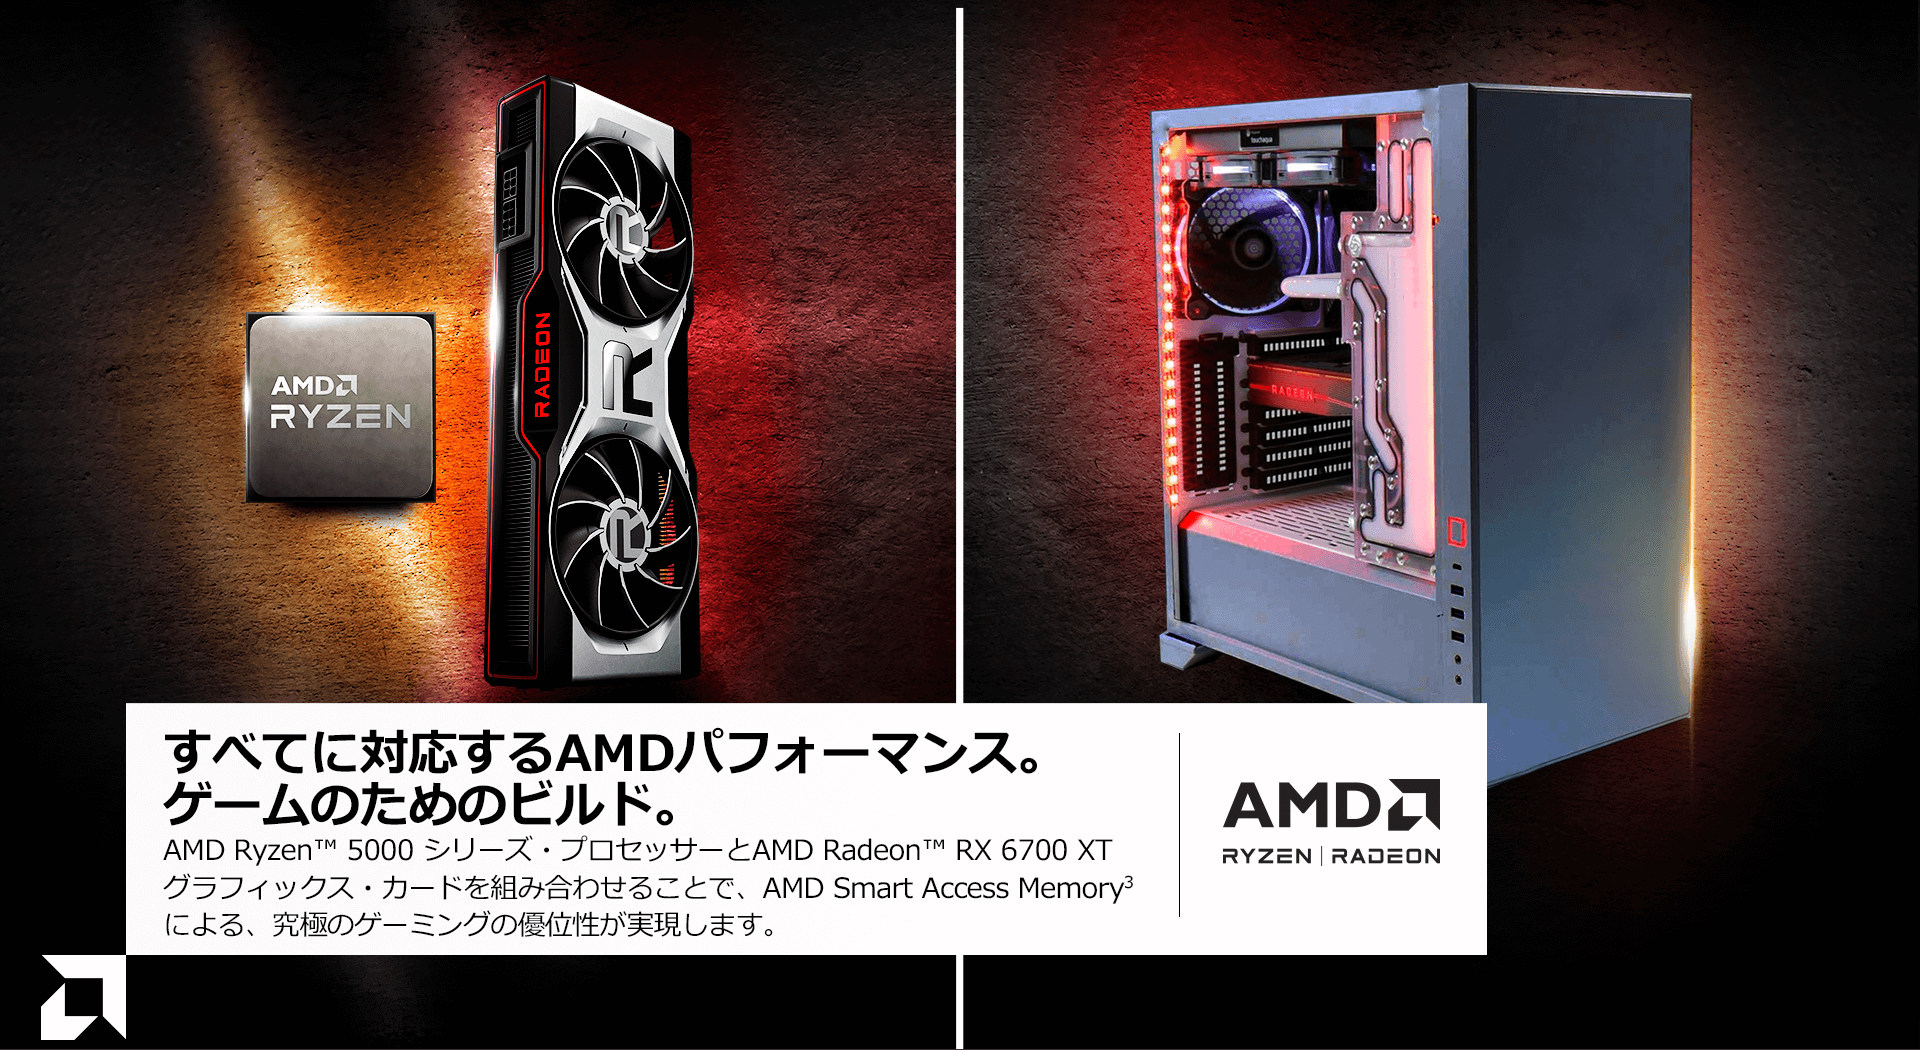 AMD Ryzen 5000 / Radeon RX 6700 XT